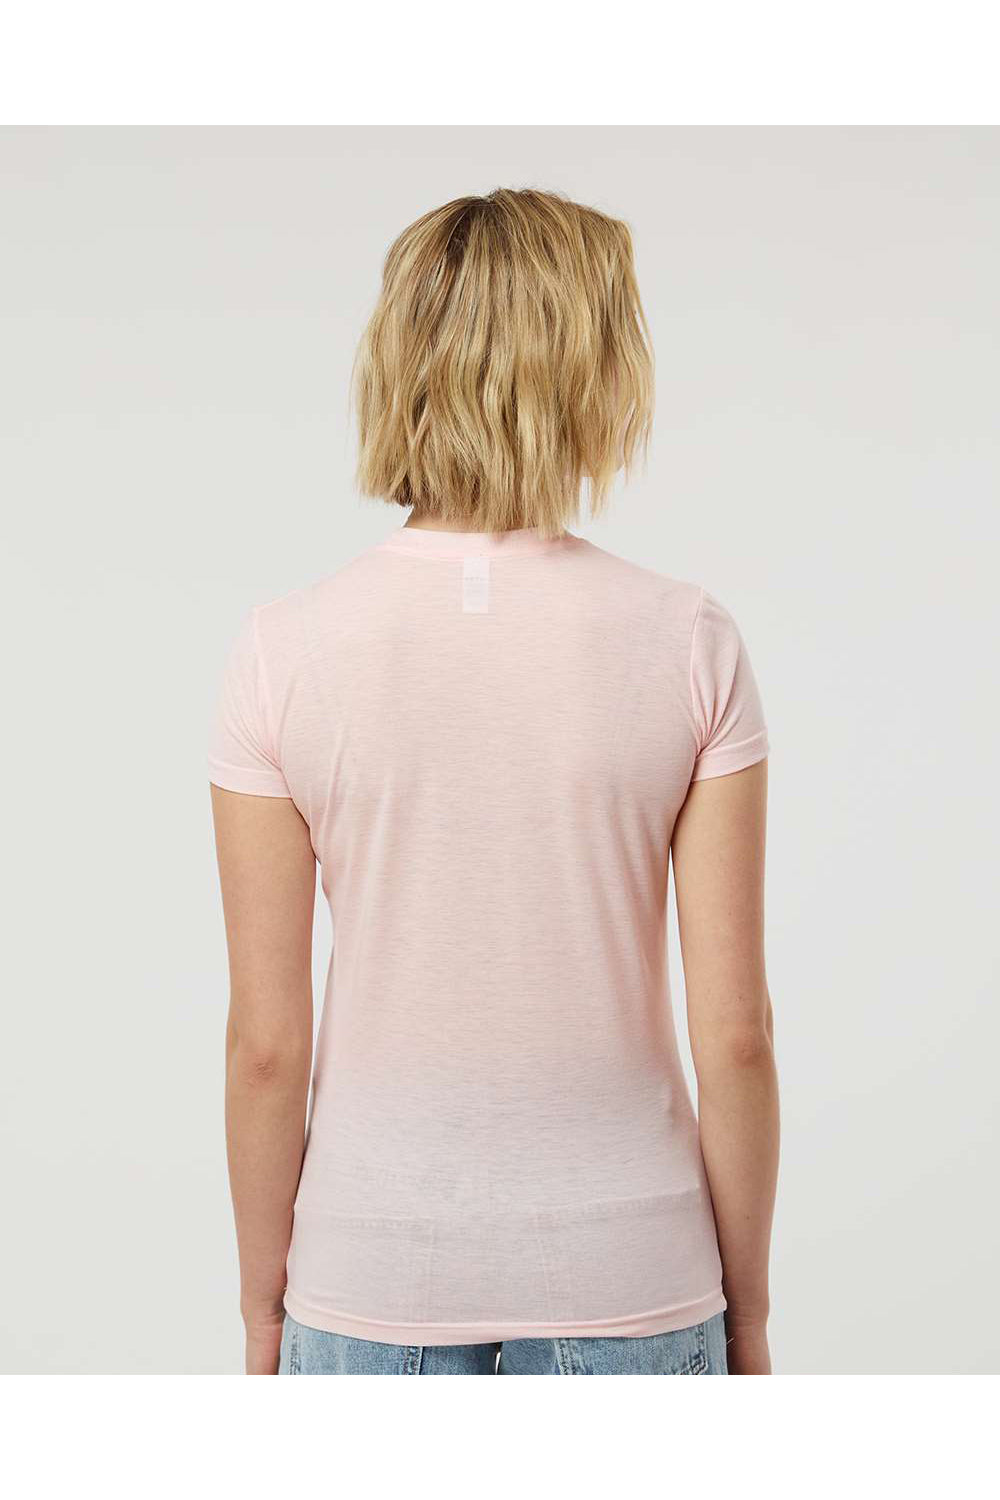 Tultex 240 Womens Poly-Rich Short Sleeve Crewneck T-Shirt Heather Pink Model Back